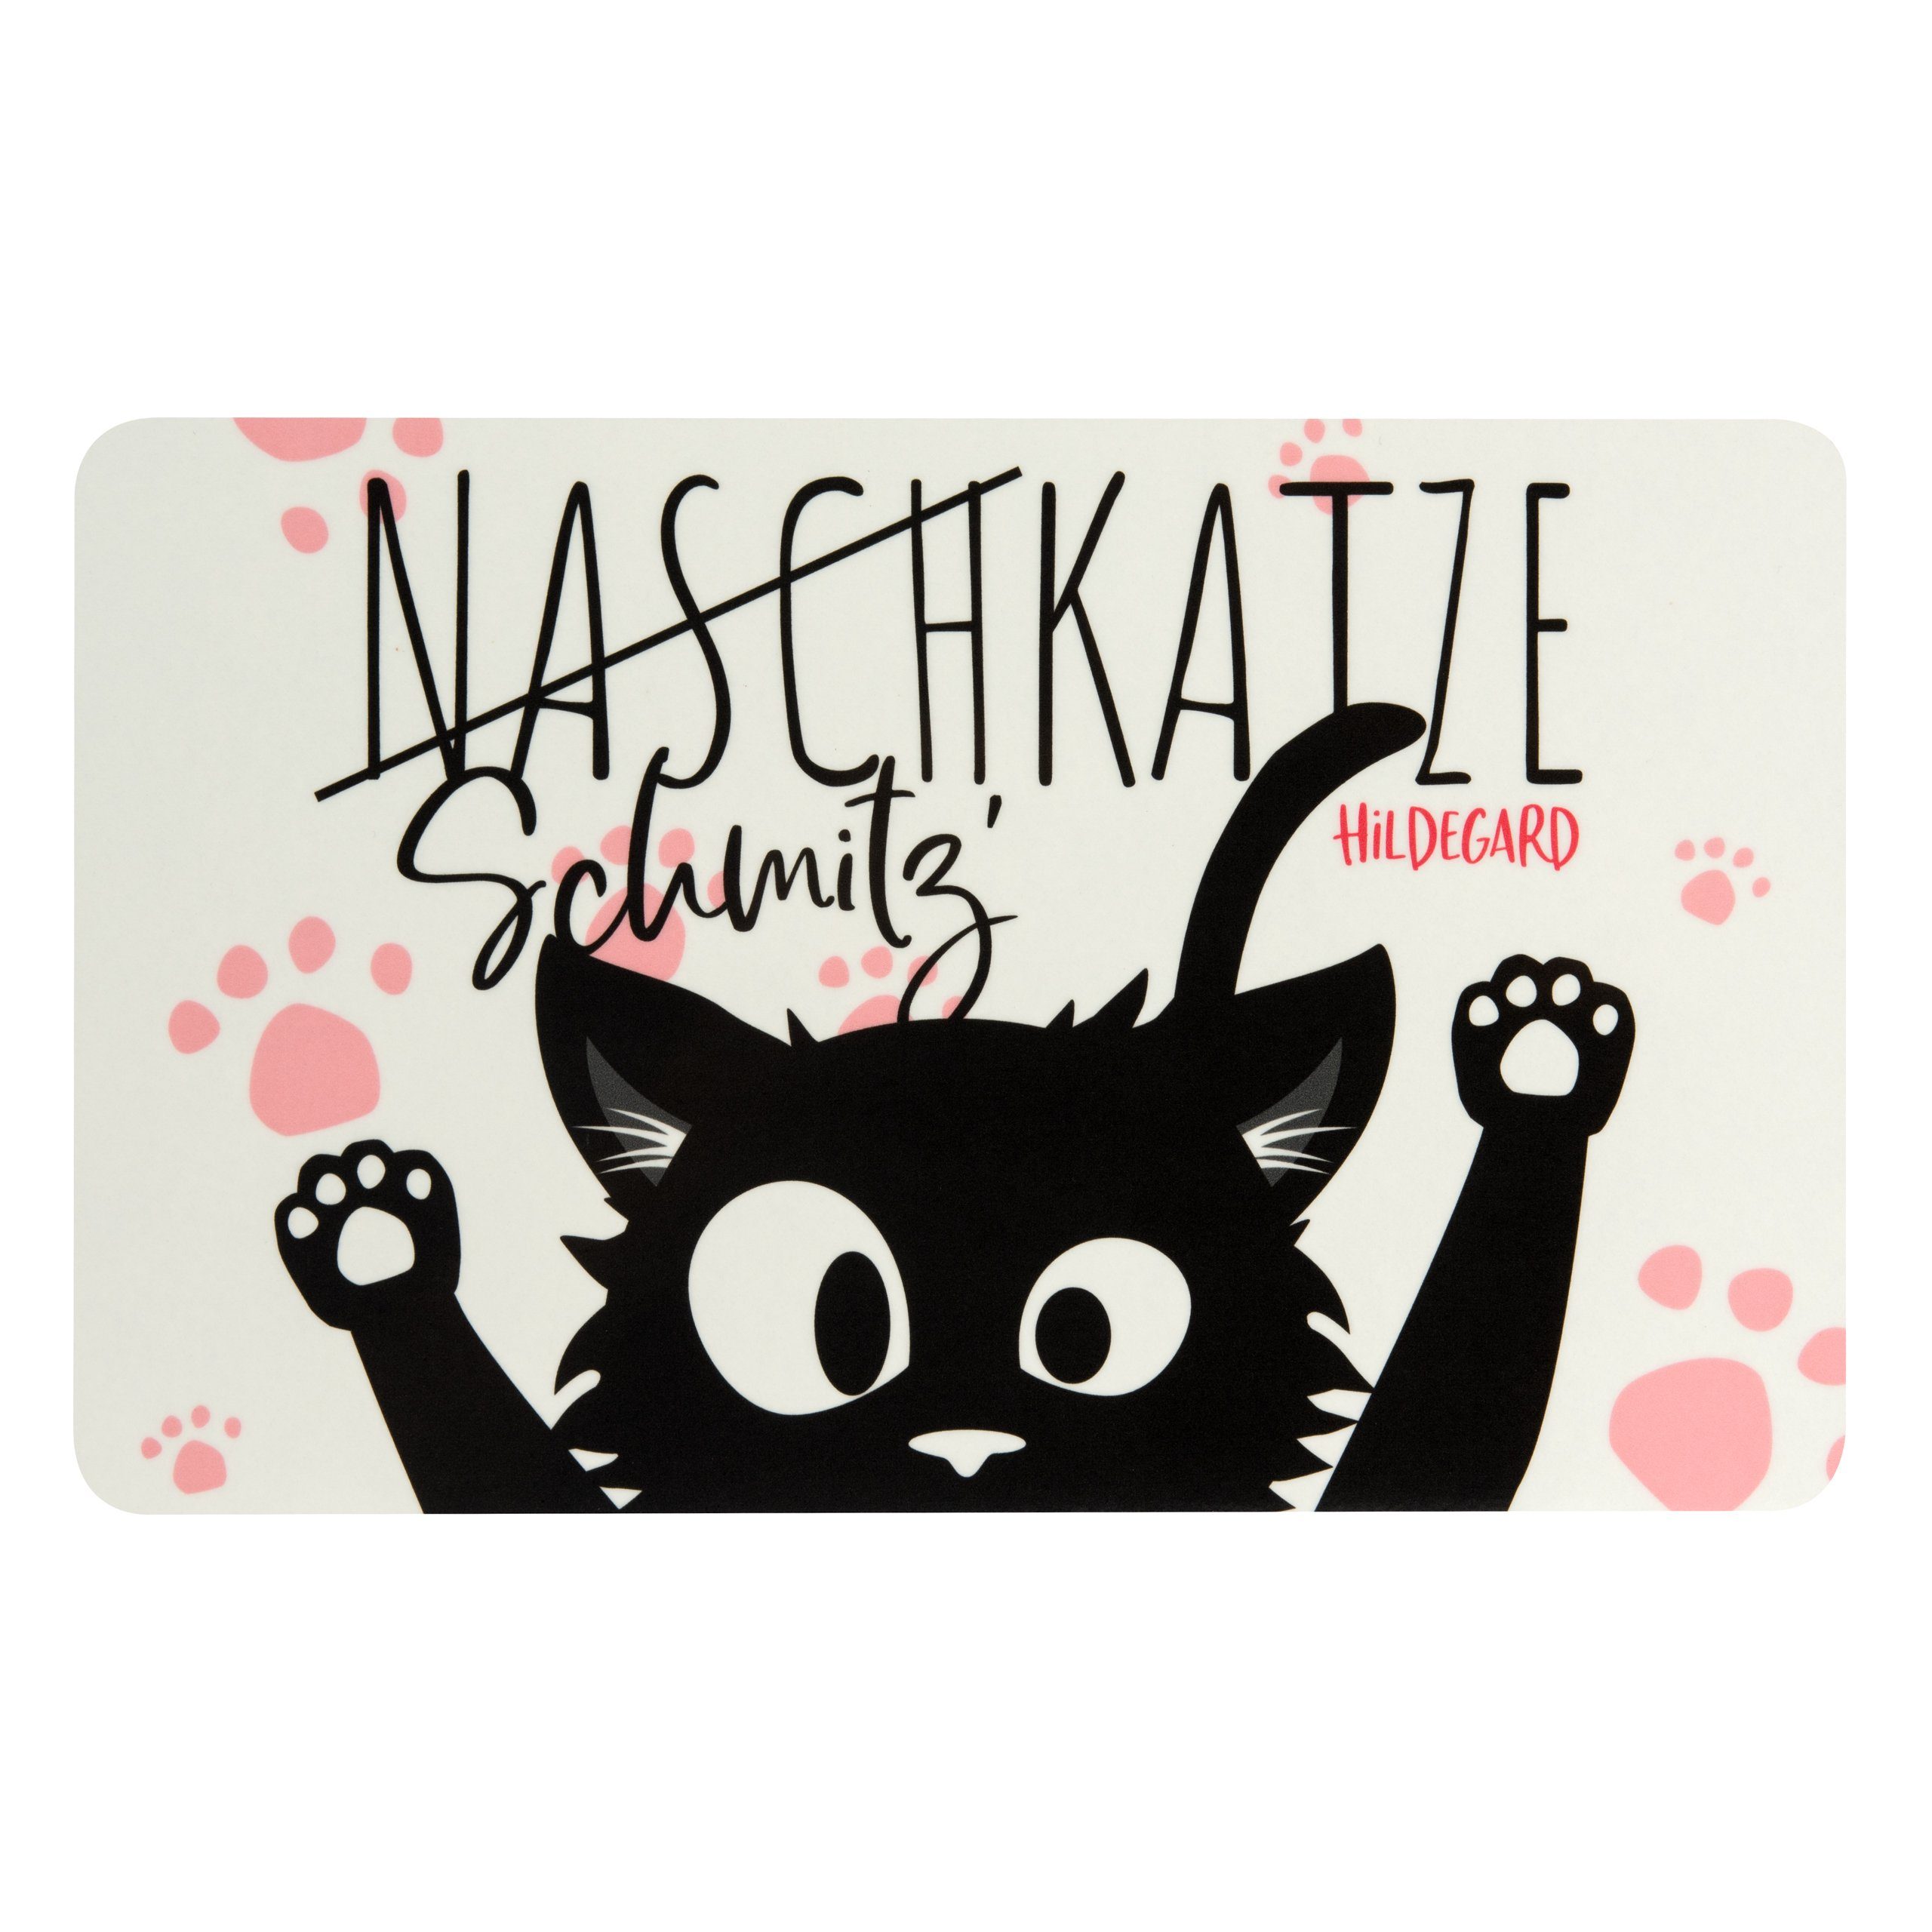 Labels® Naschkatze - Frühstücksbrett Resopal Schmitz Ralf Hildegard, Brettchen United